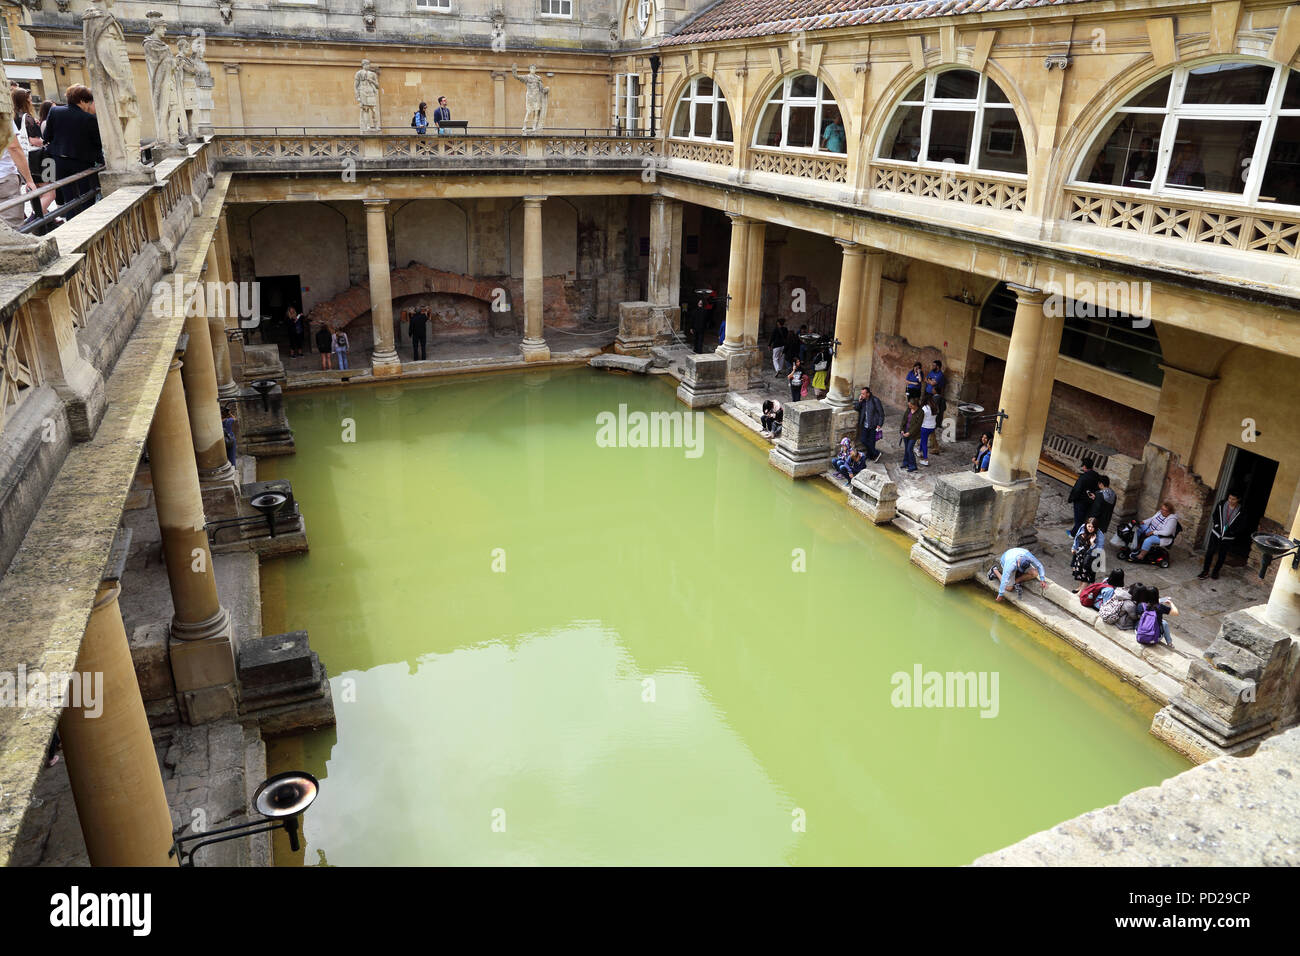 The Roman baths in Bath England. Stock Photo